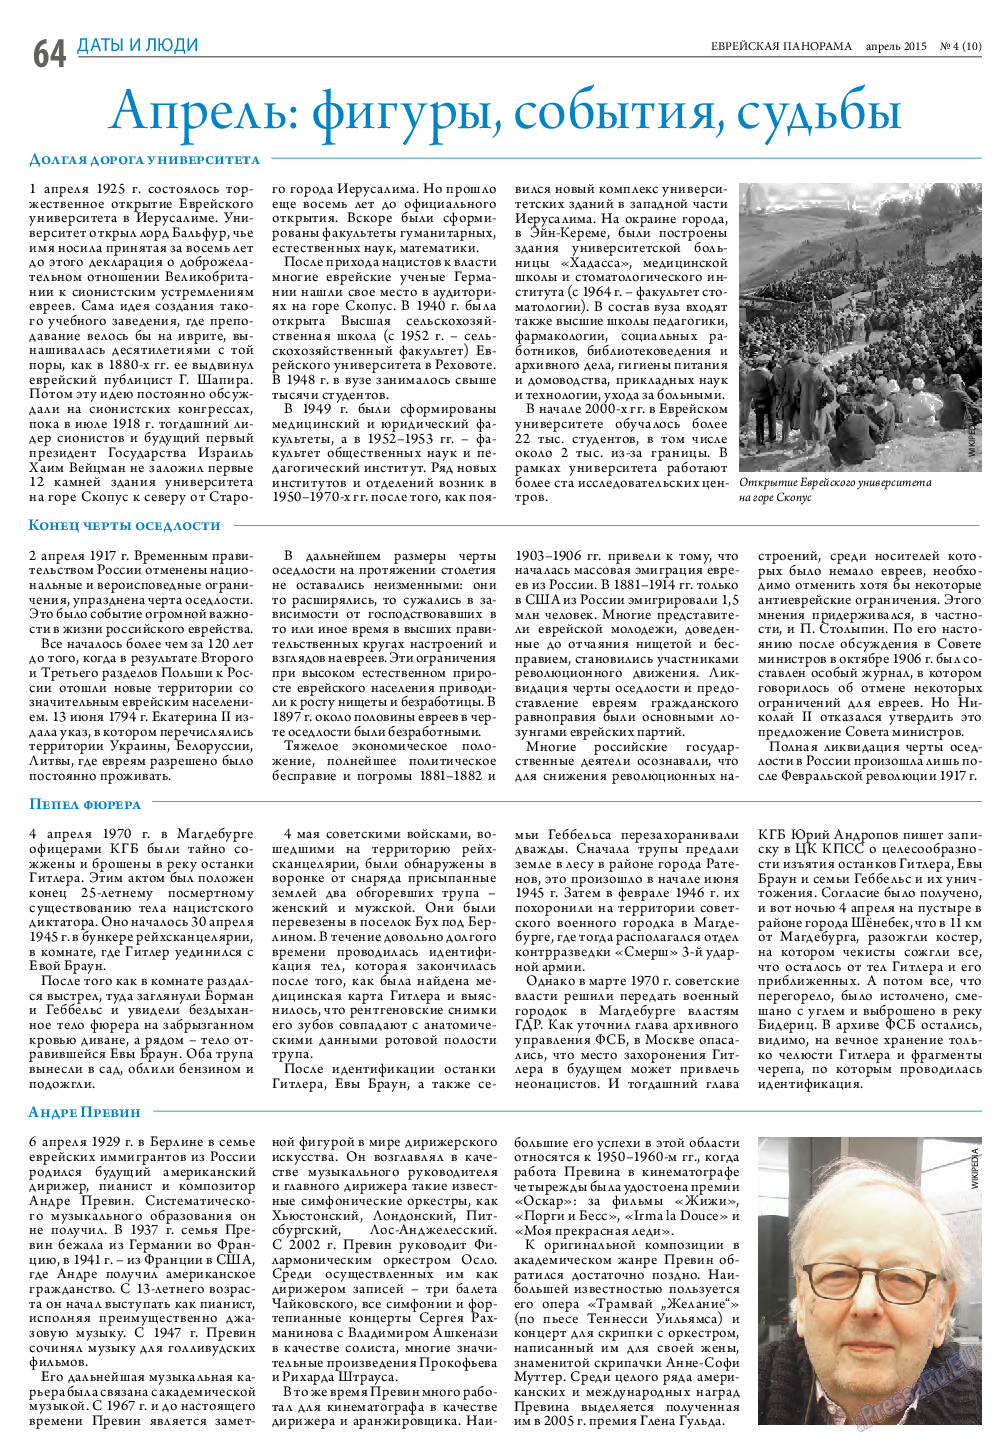 Еврейская панорама, газета. 2015 №4 стр.64